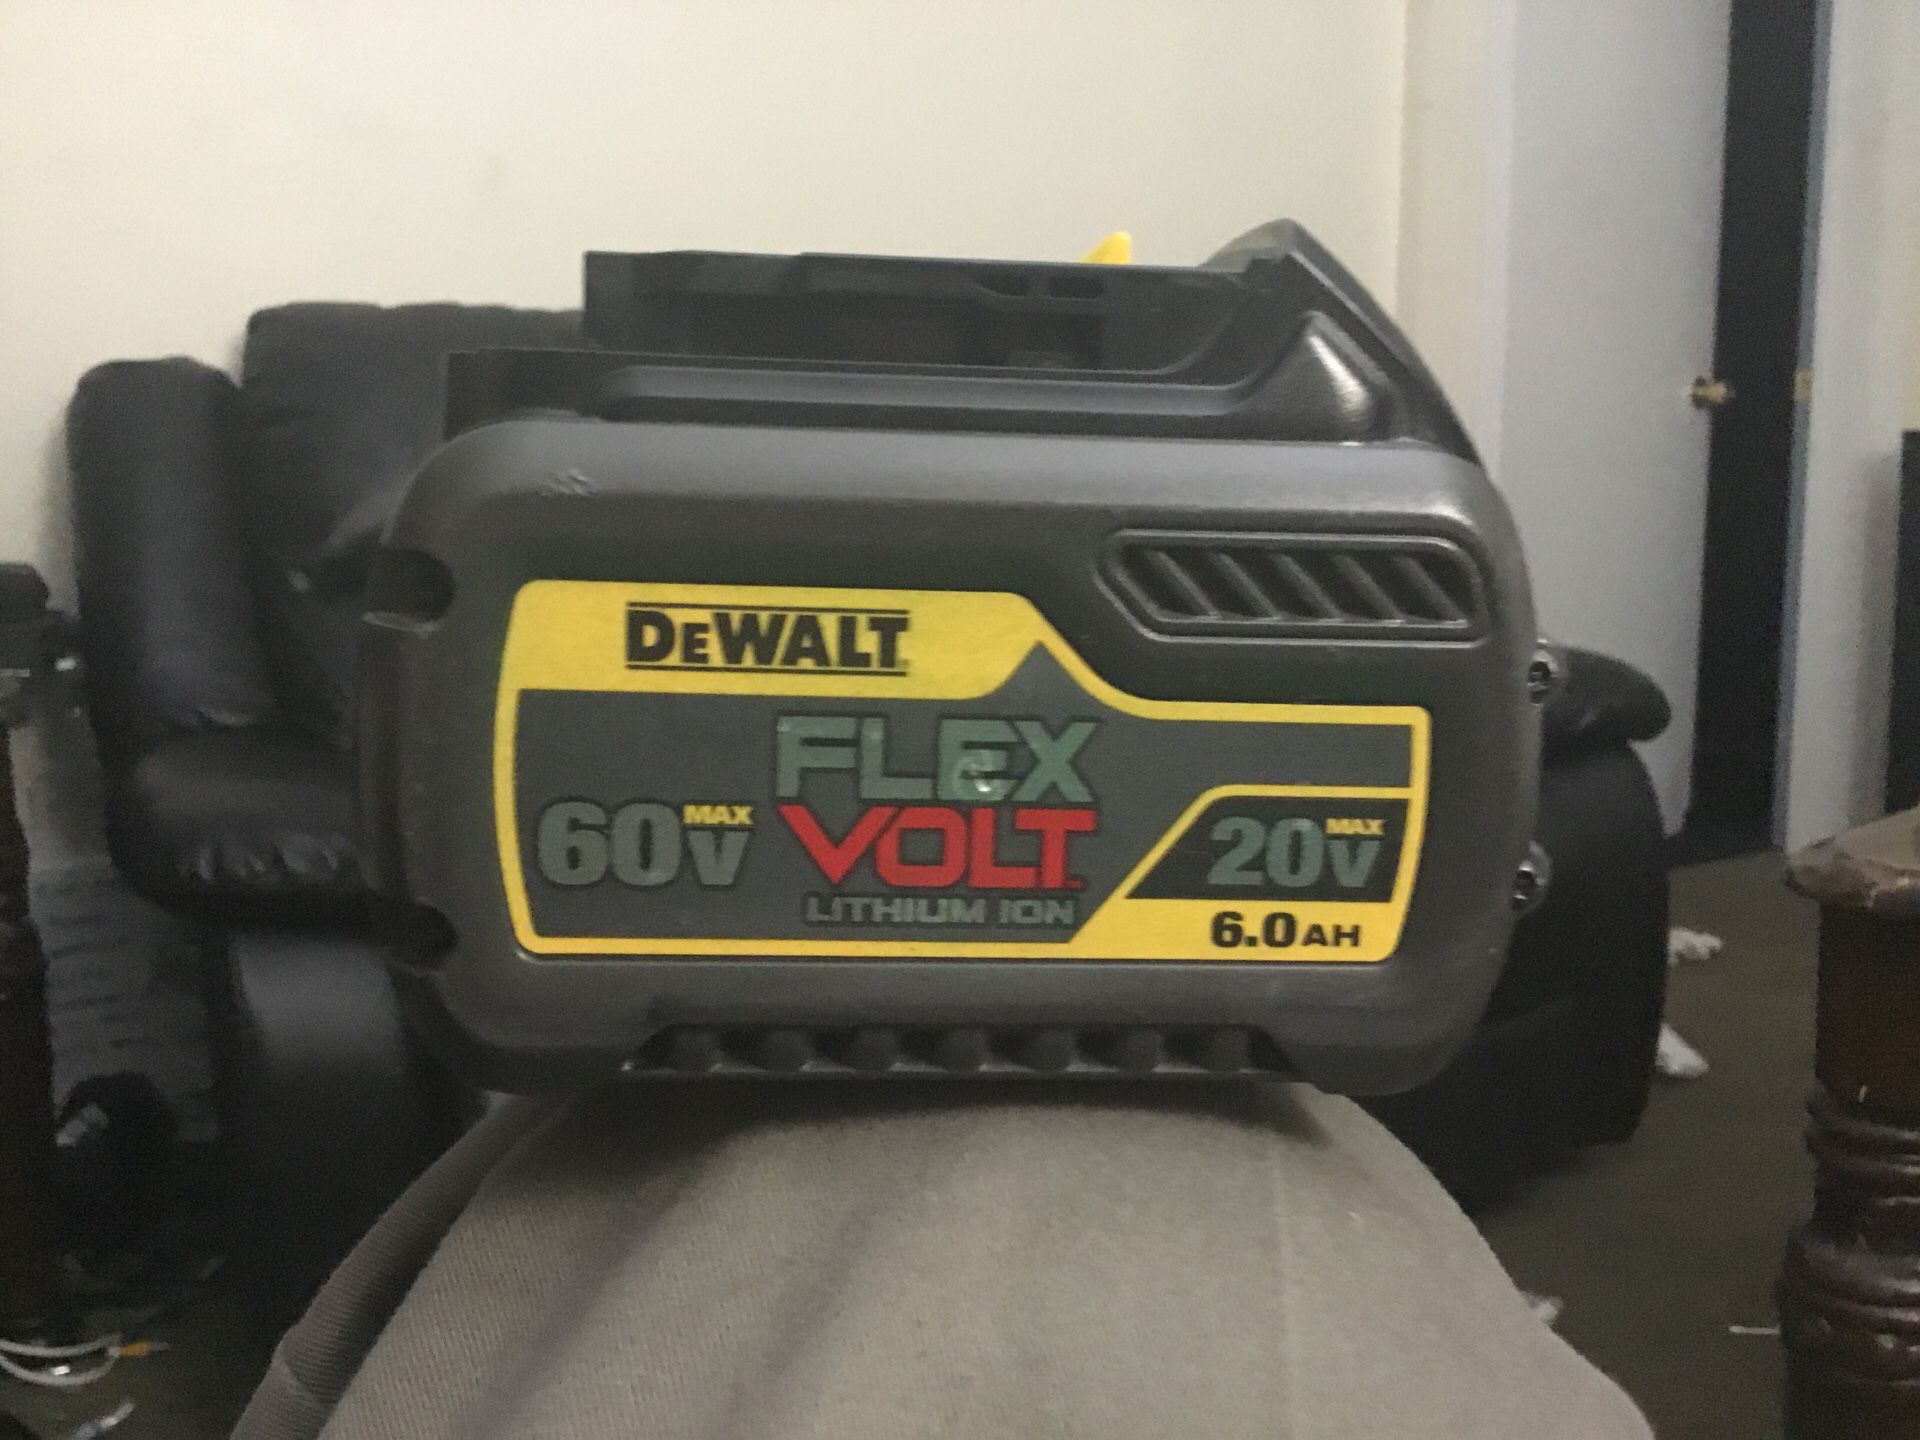 Dewalt flex volt 60/20volt 6.0ah battery Used 5 times/like new